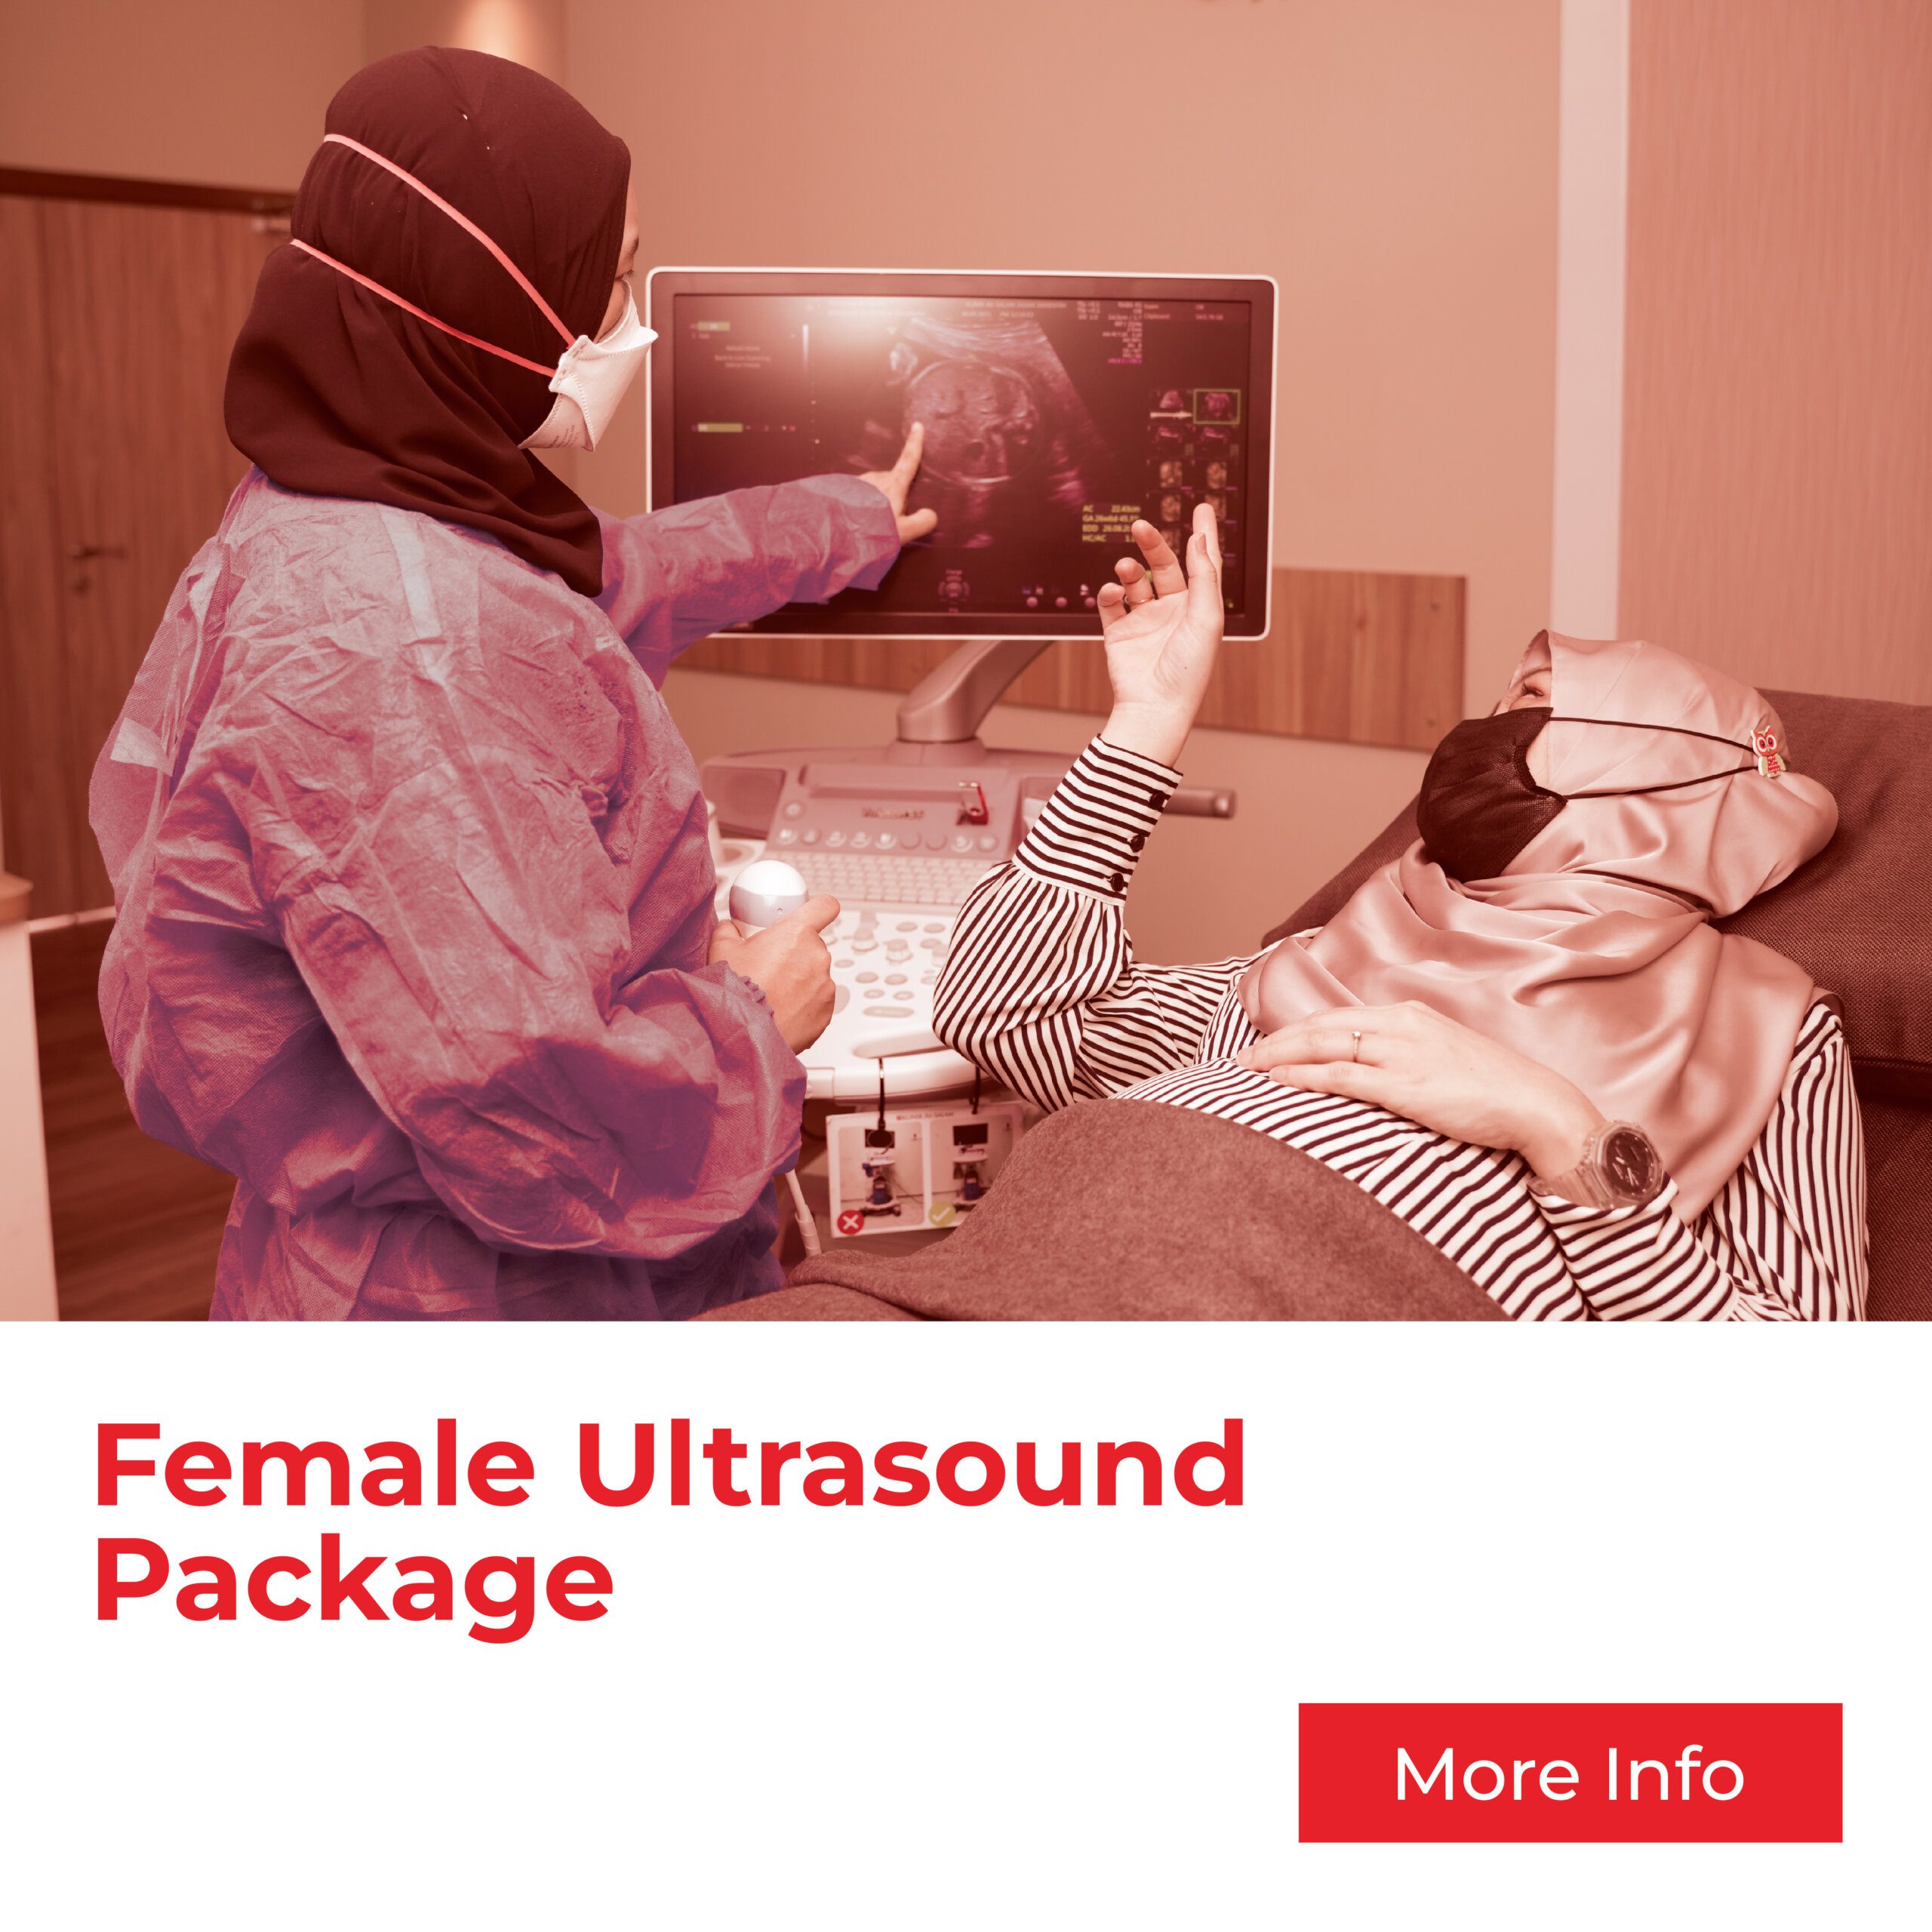 Female Ultrasound Packages by Klinik As Salam